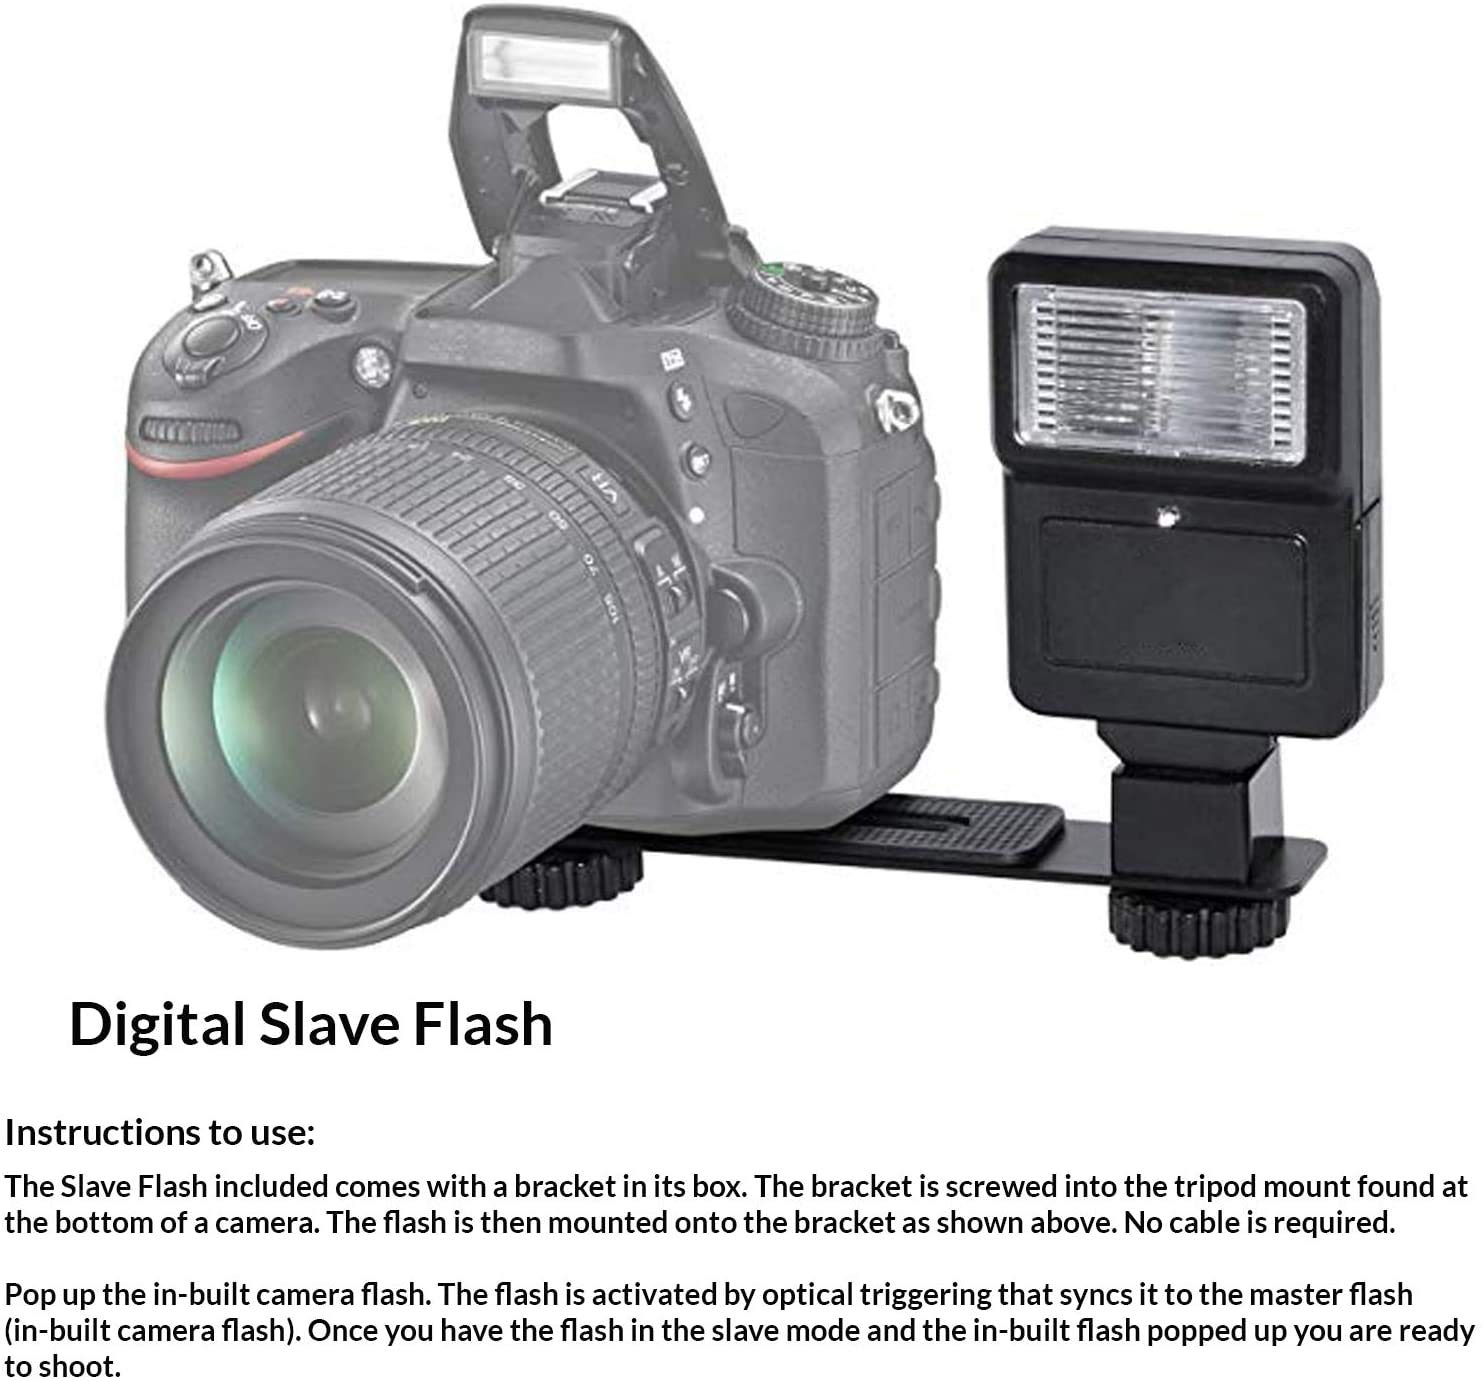 Camera EOS 2000D (Rebel T7) DSLR with 18-55mm f/3.5-5.6 3 Lens Kit Bundled with + 64GB Memory Card, Extra Battery, 3PC Filter Kit, Tripod, Case + Complete Photo Bundle - International Model